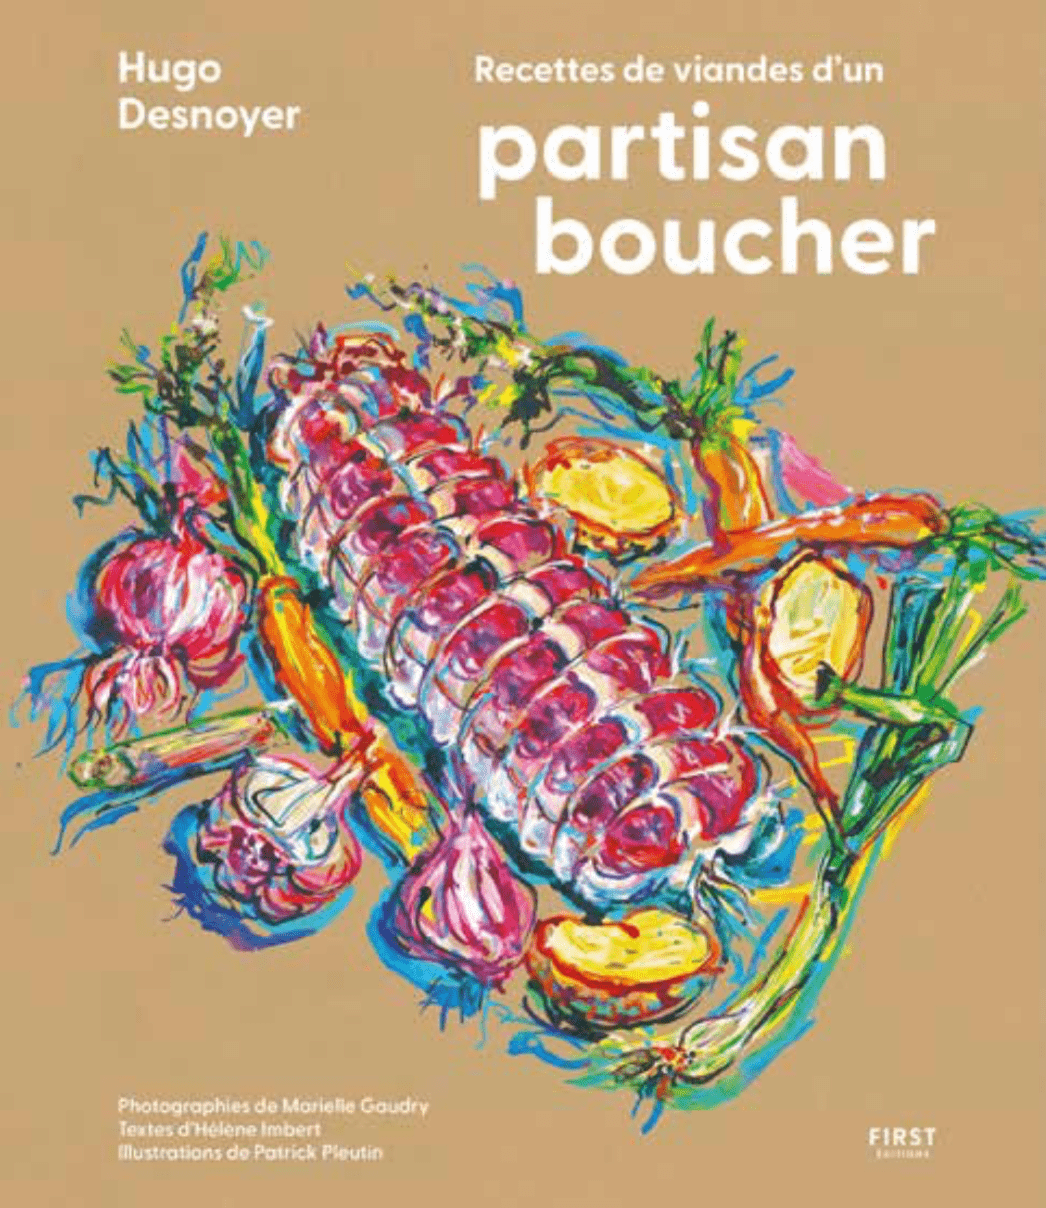 « Partisan boucher » : nouvel ouvrage d’Hugo Desnoyer